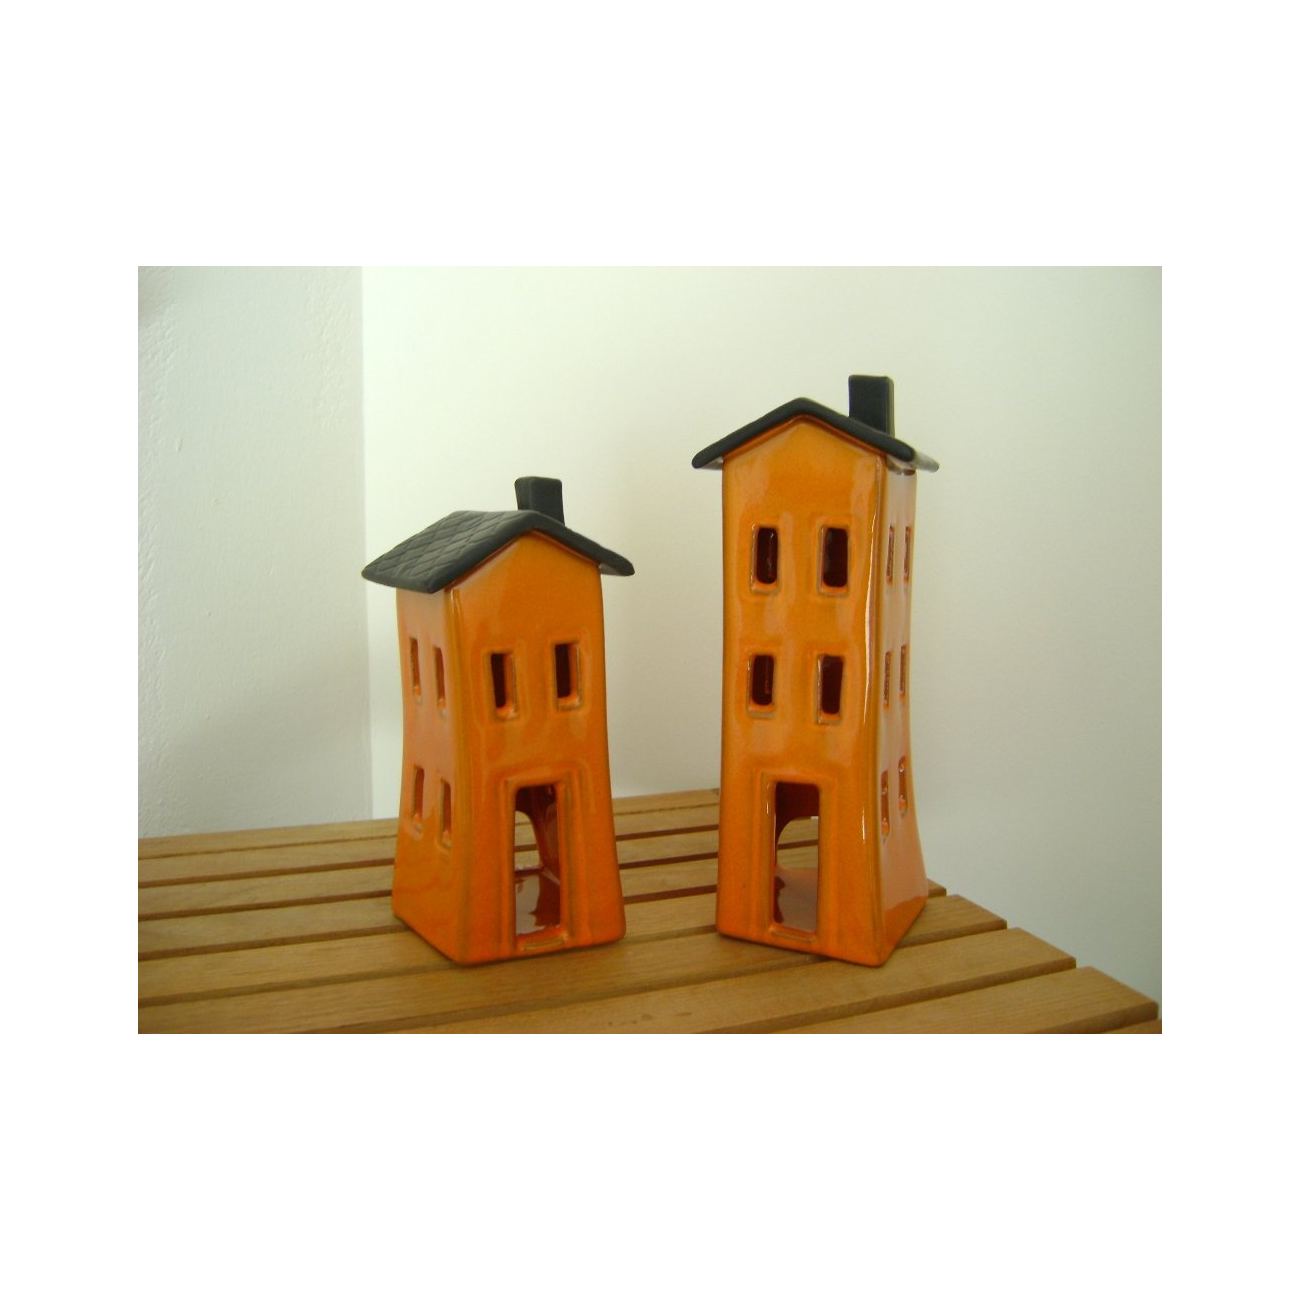 Red Candle Lantern, House Design - Modern Handmade Ceramic - Small